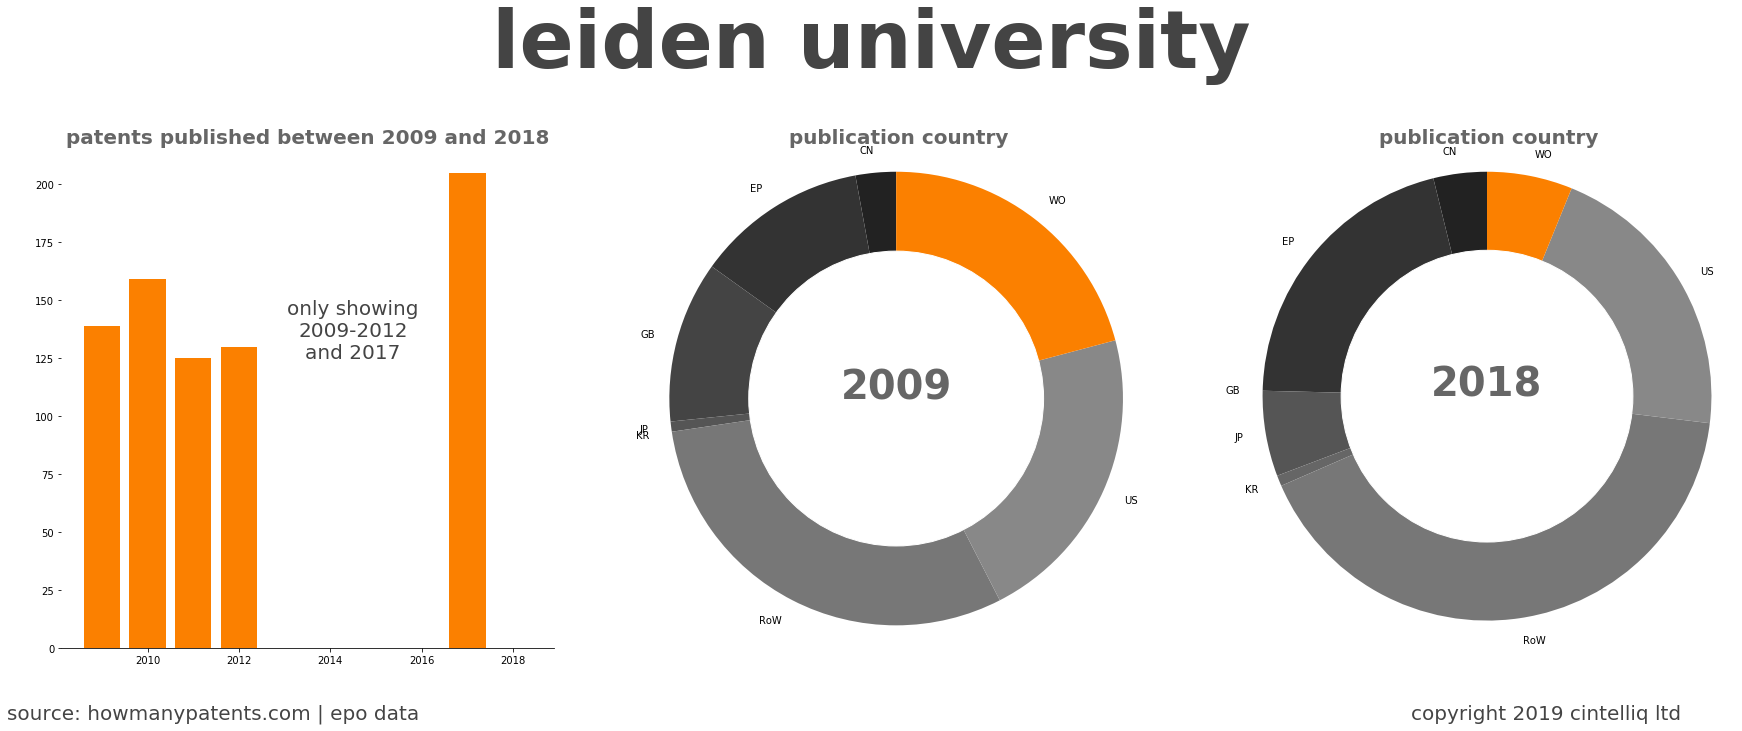 summary of patents for Leiden University